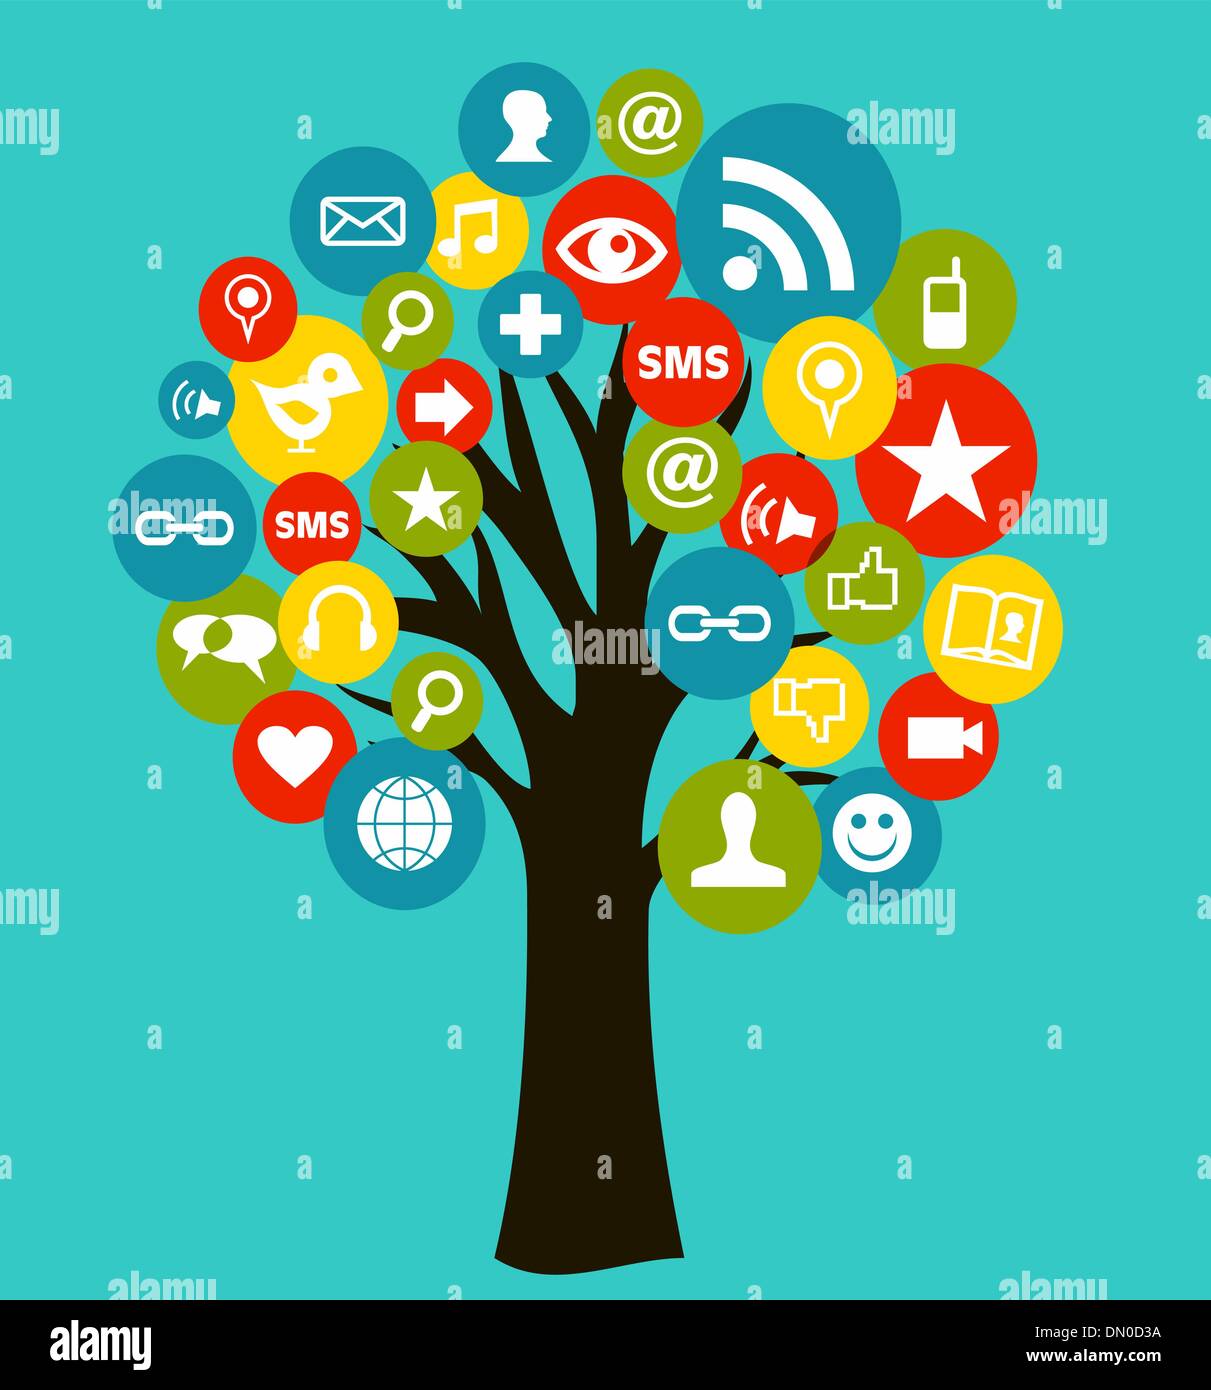 Social-Media-Netzwerke Geschäft Baum Stock Vektor